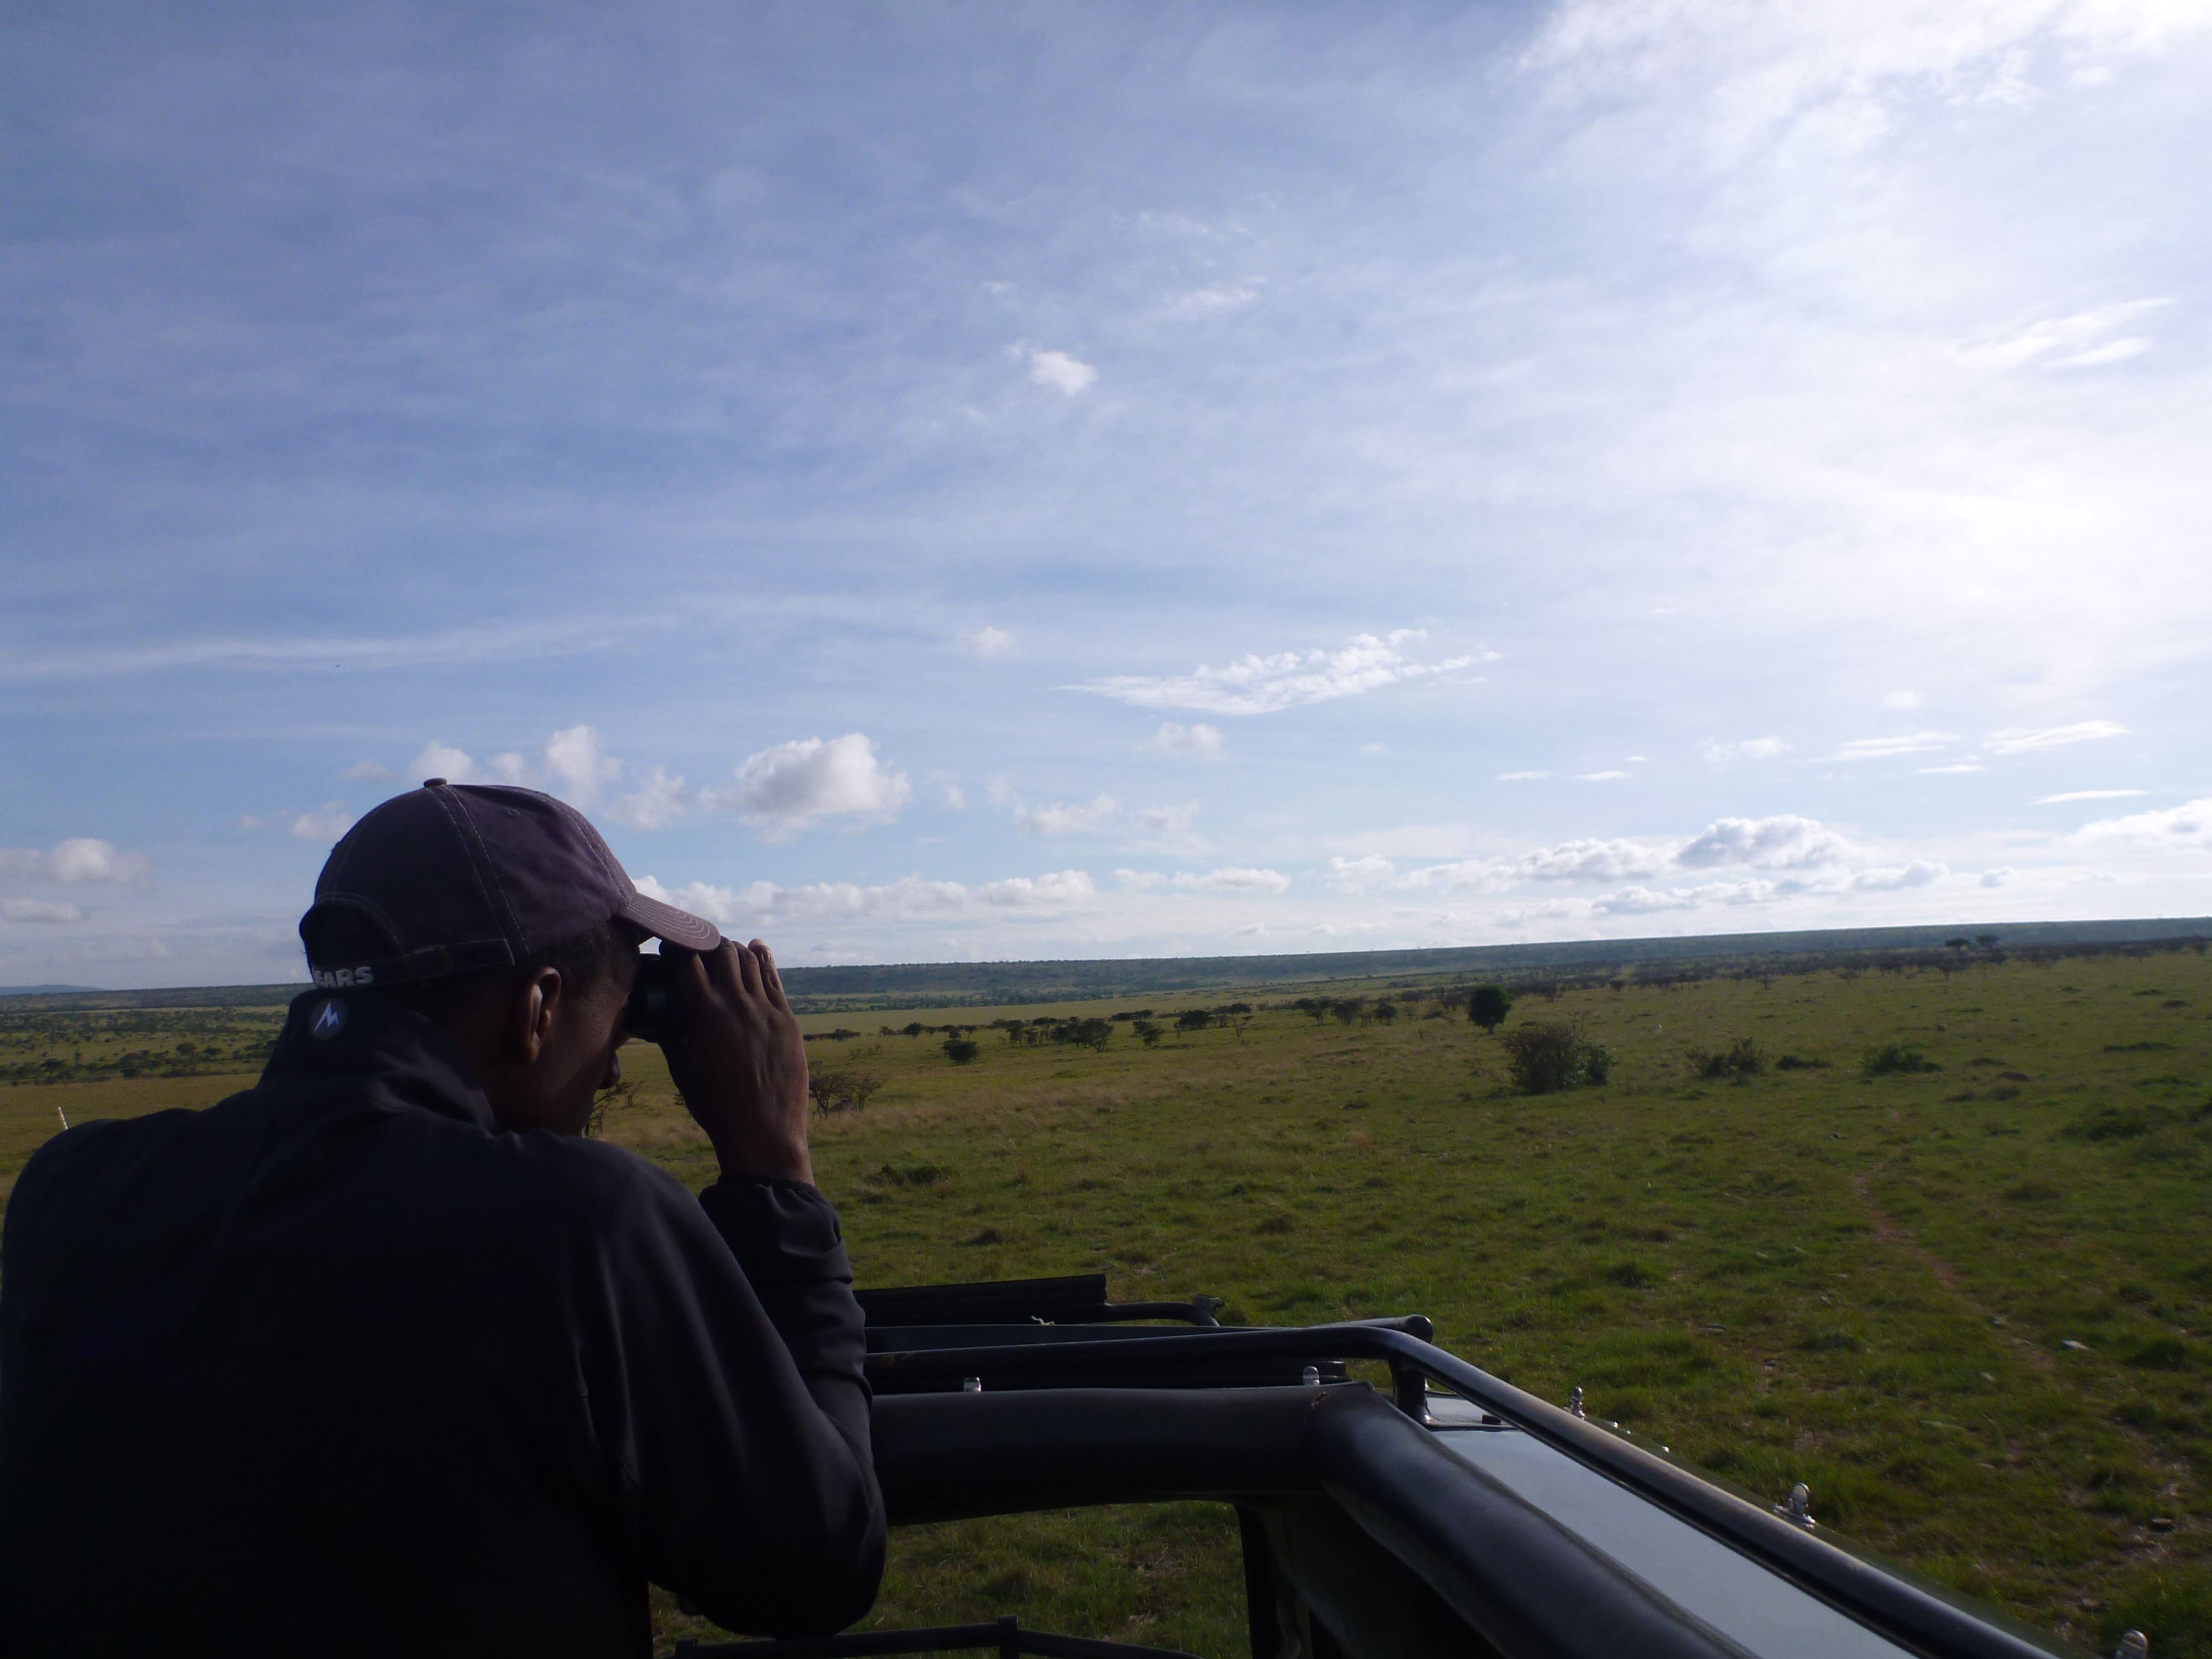 Searching for wildlife on safari